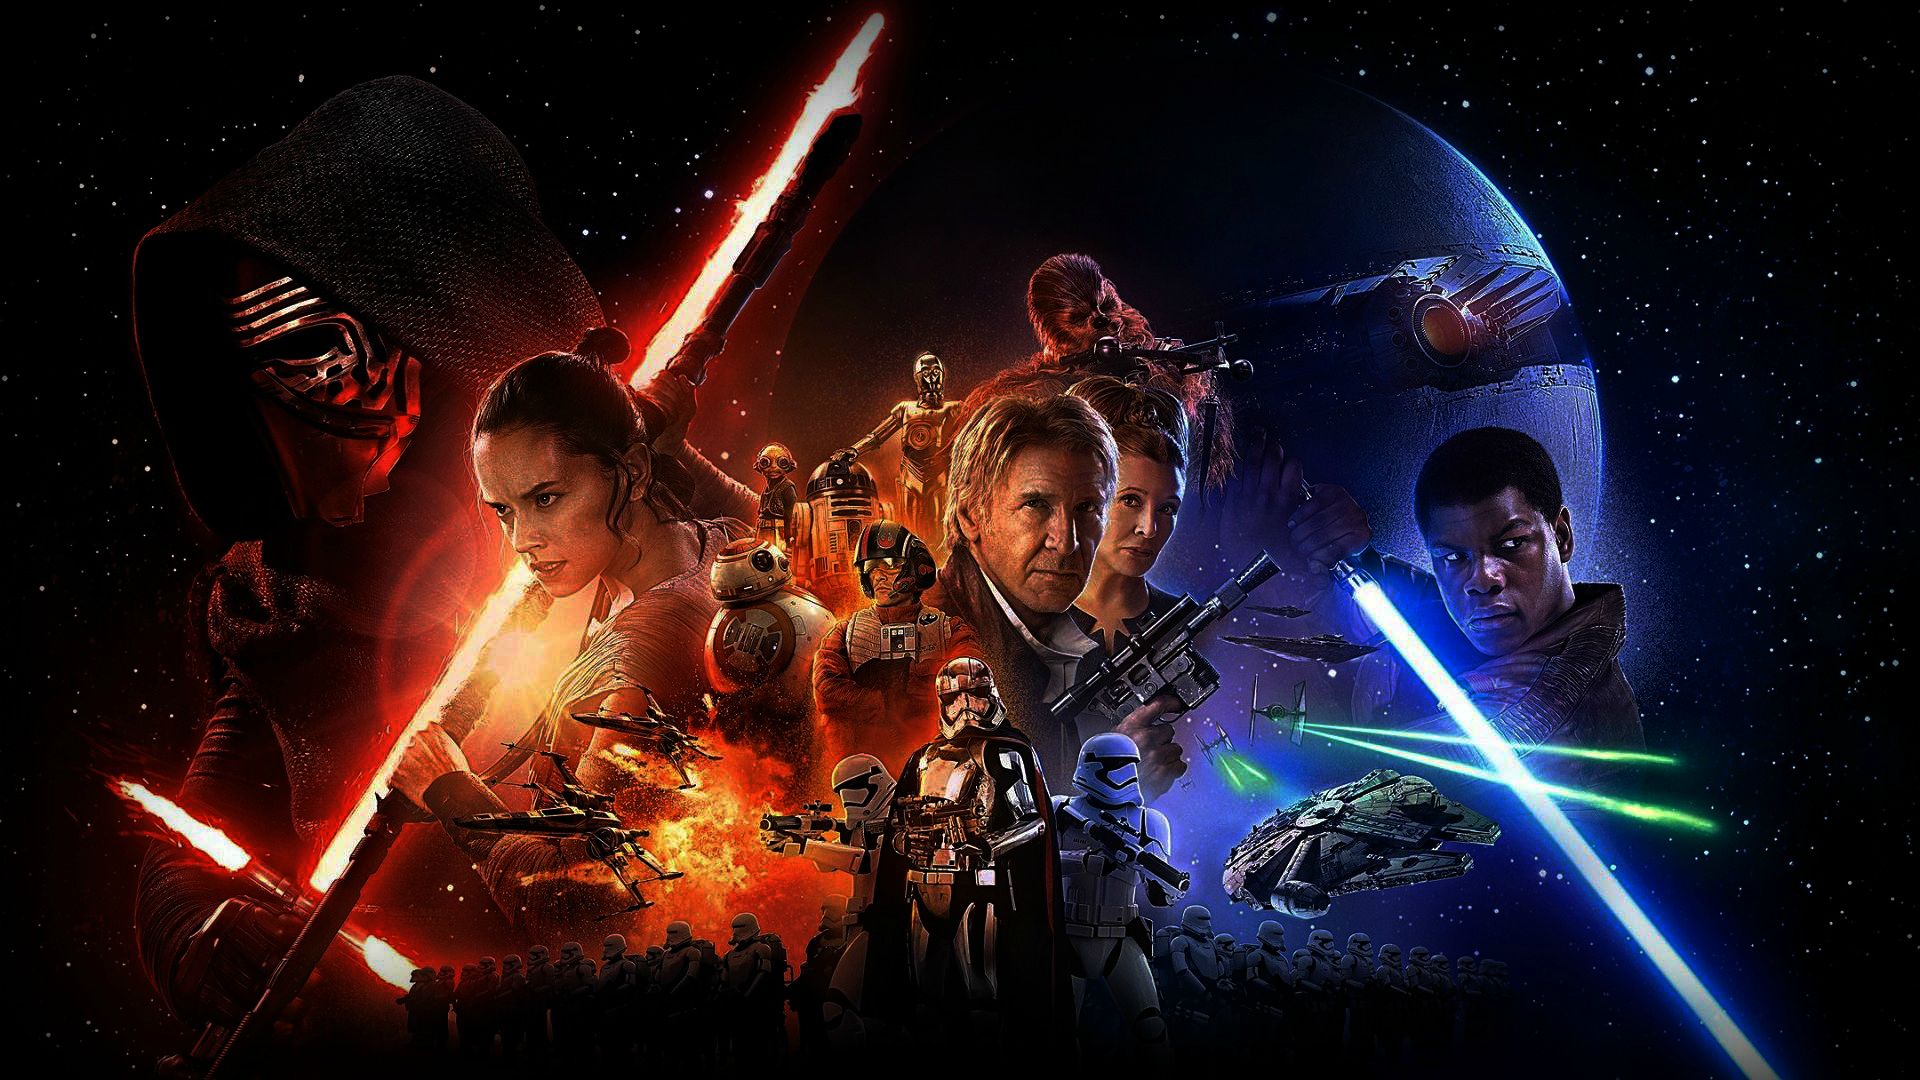 Star Wars Episode VII: The Force Awakens #19